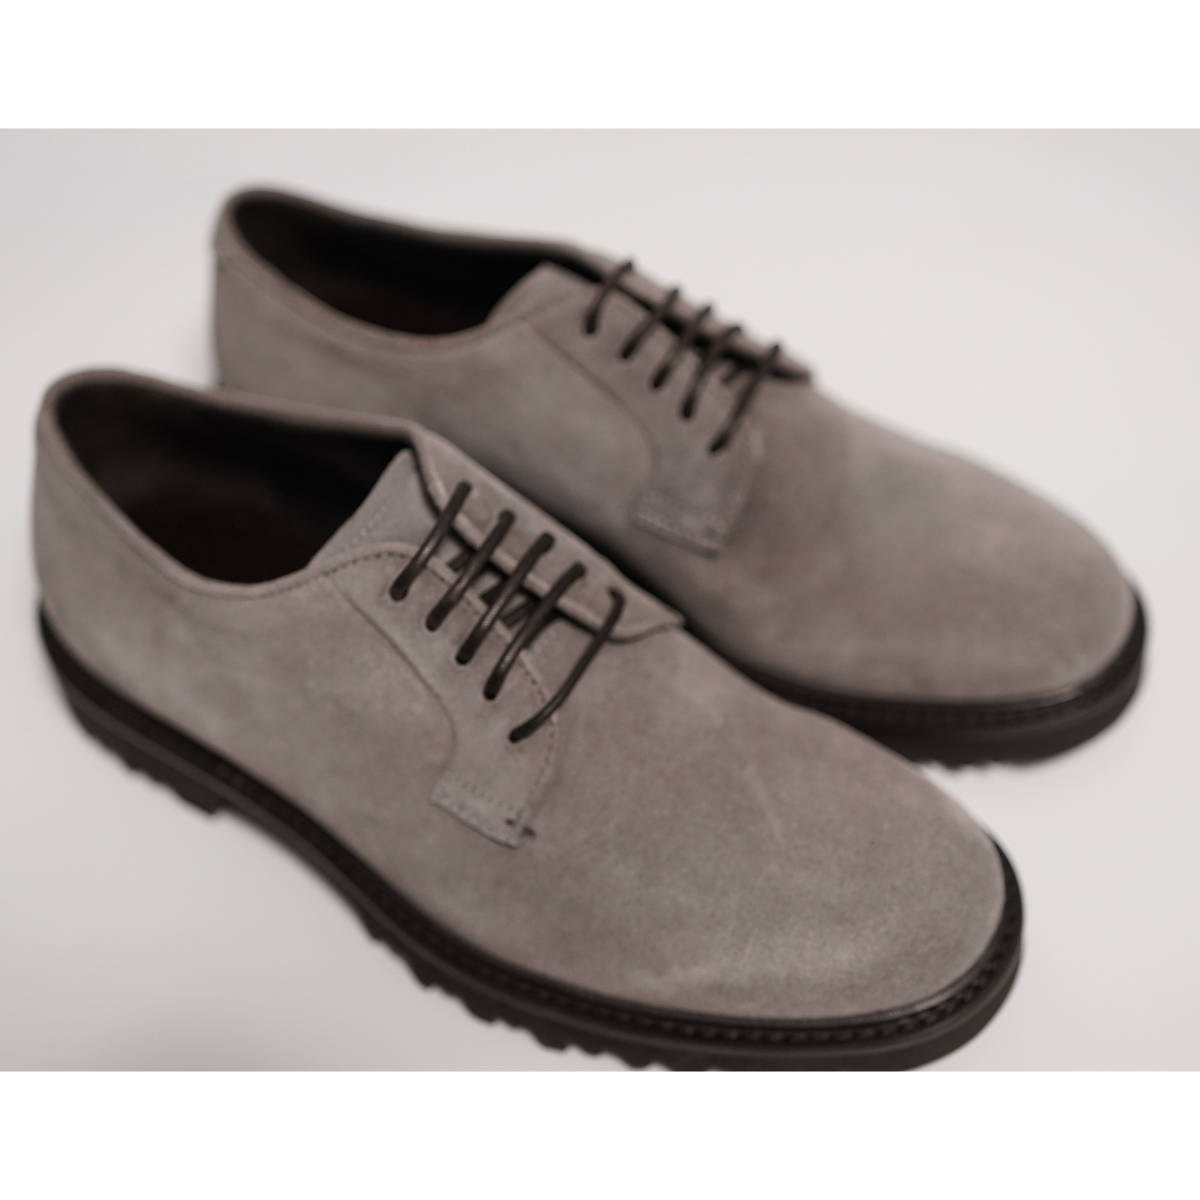  small size standard design GIORGIO ARMANI leather shoes 24CMjoru geo Armani gray ju5 39 size suede shoes 